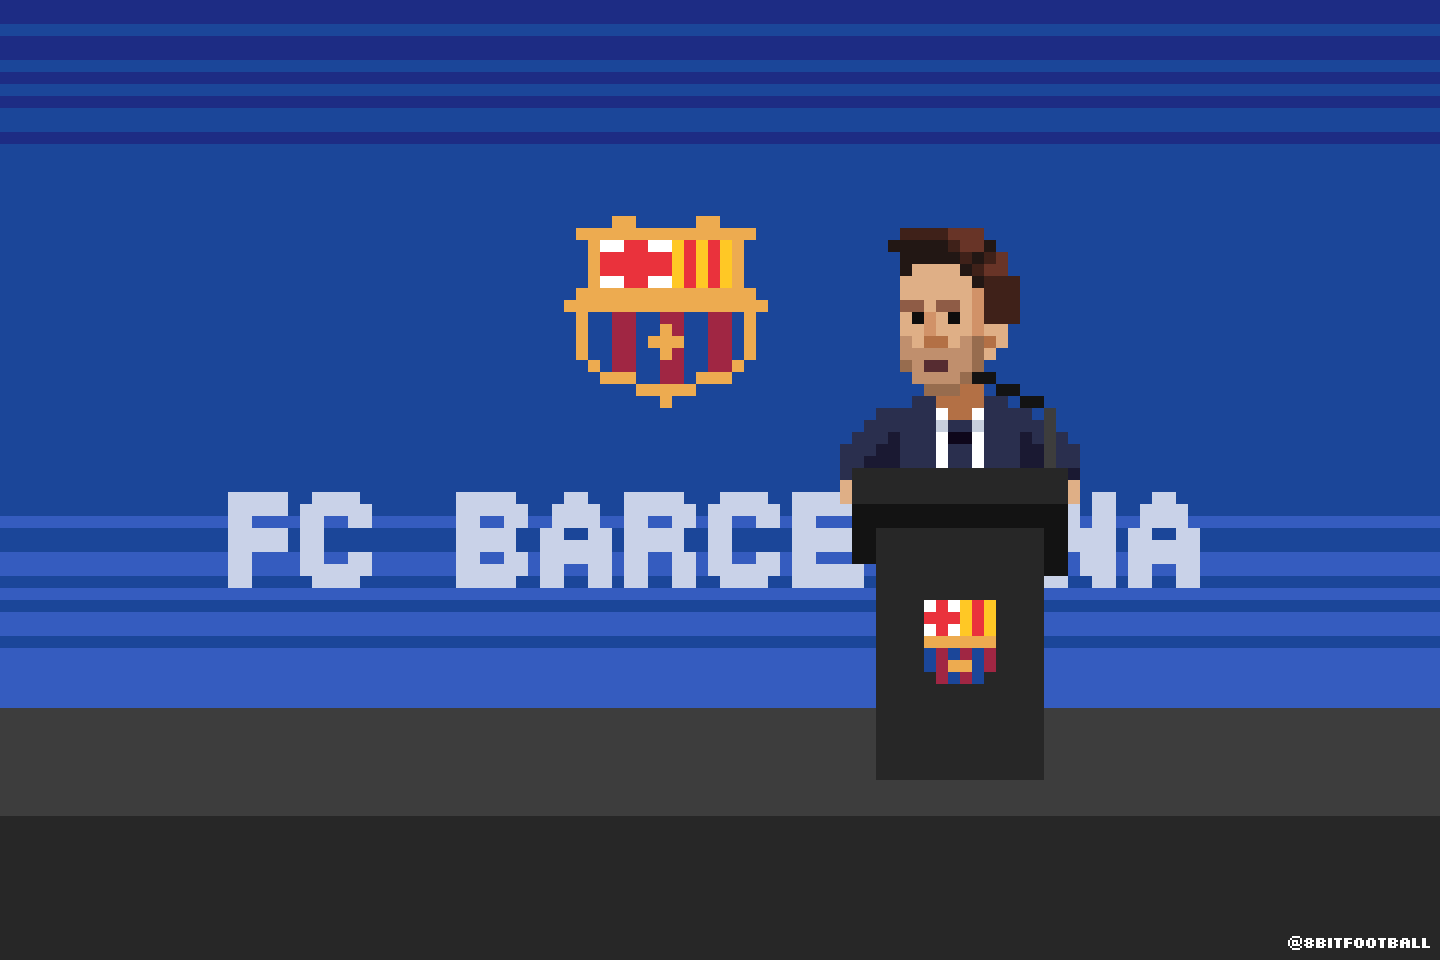 Messi's farewell to Barcelona